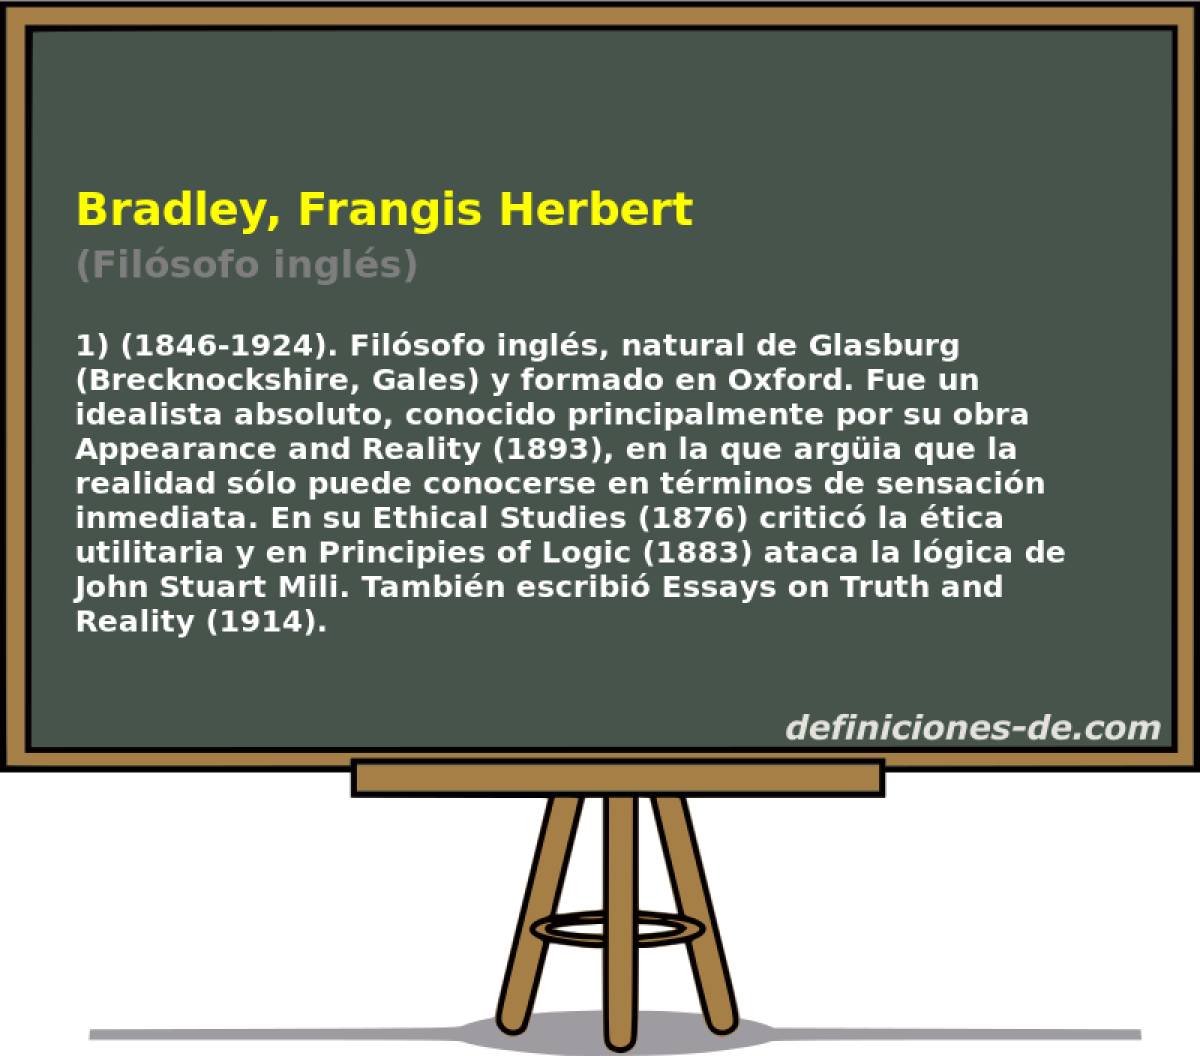 Bradley, Frangis Herbert (Filsofo ingls)